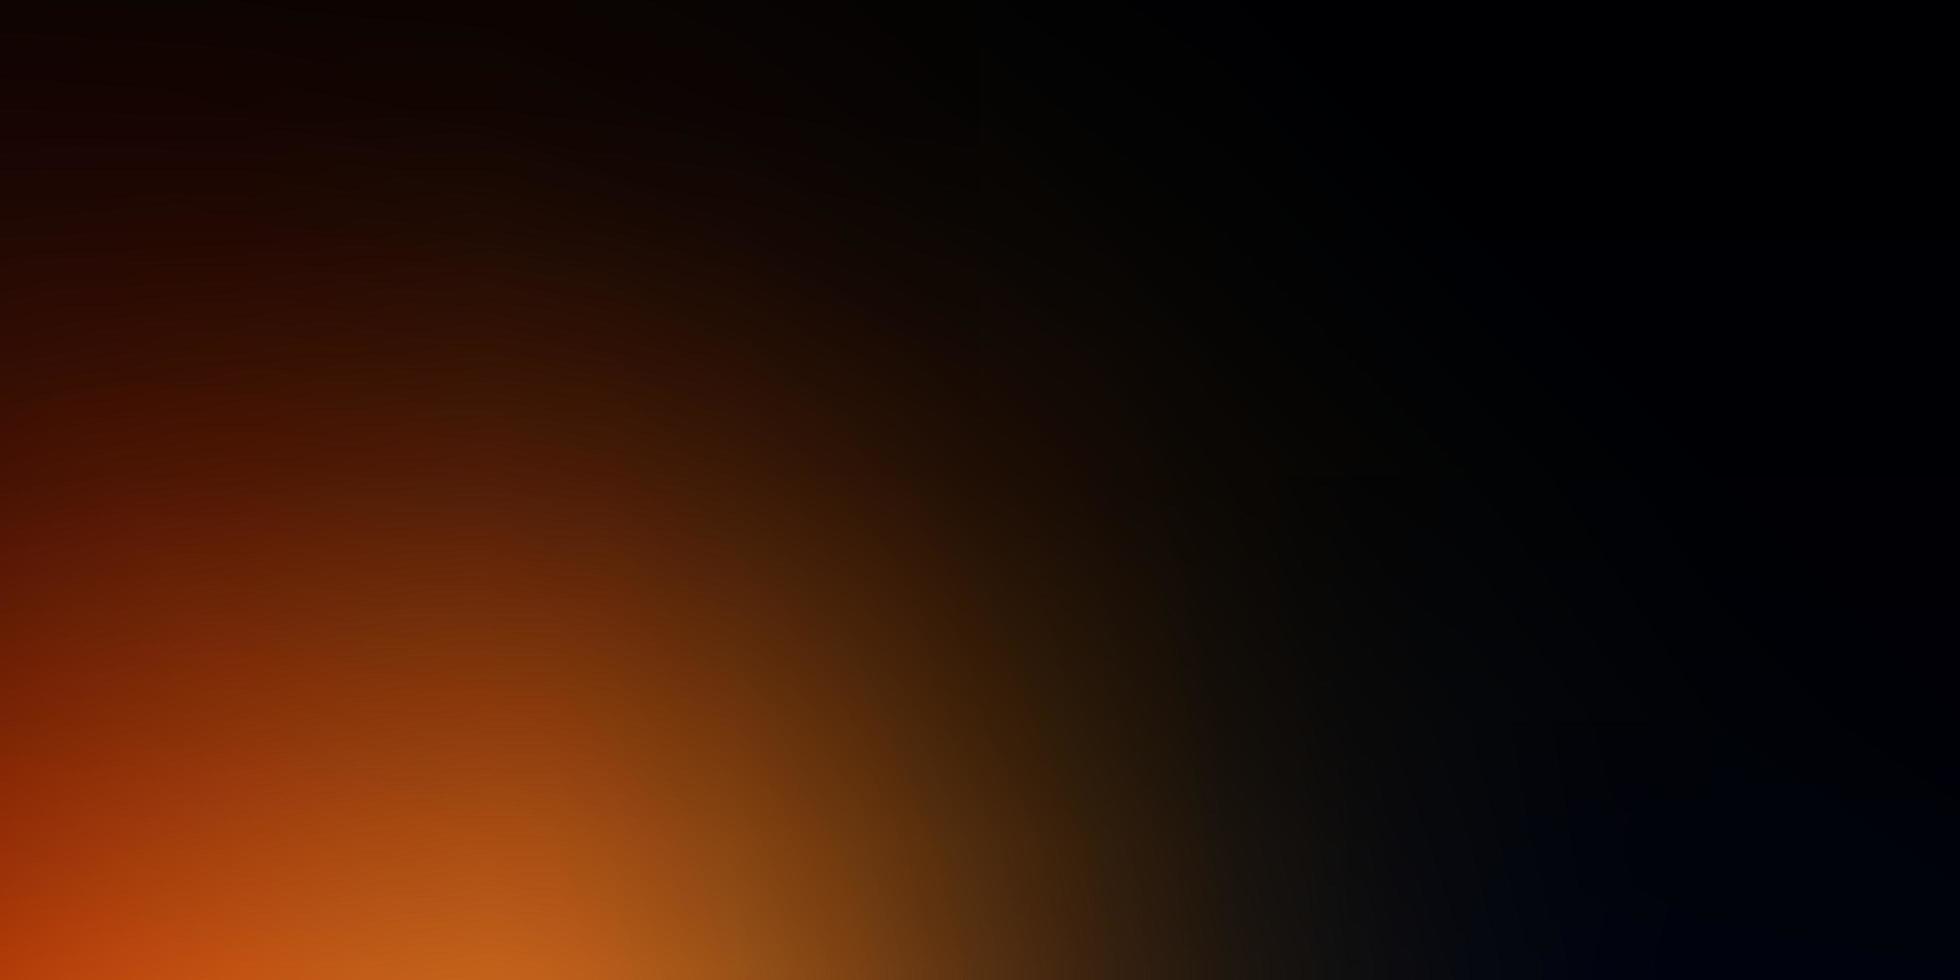 Dark Orange vector smart blurred template